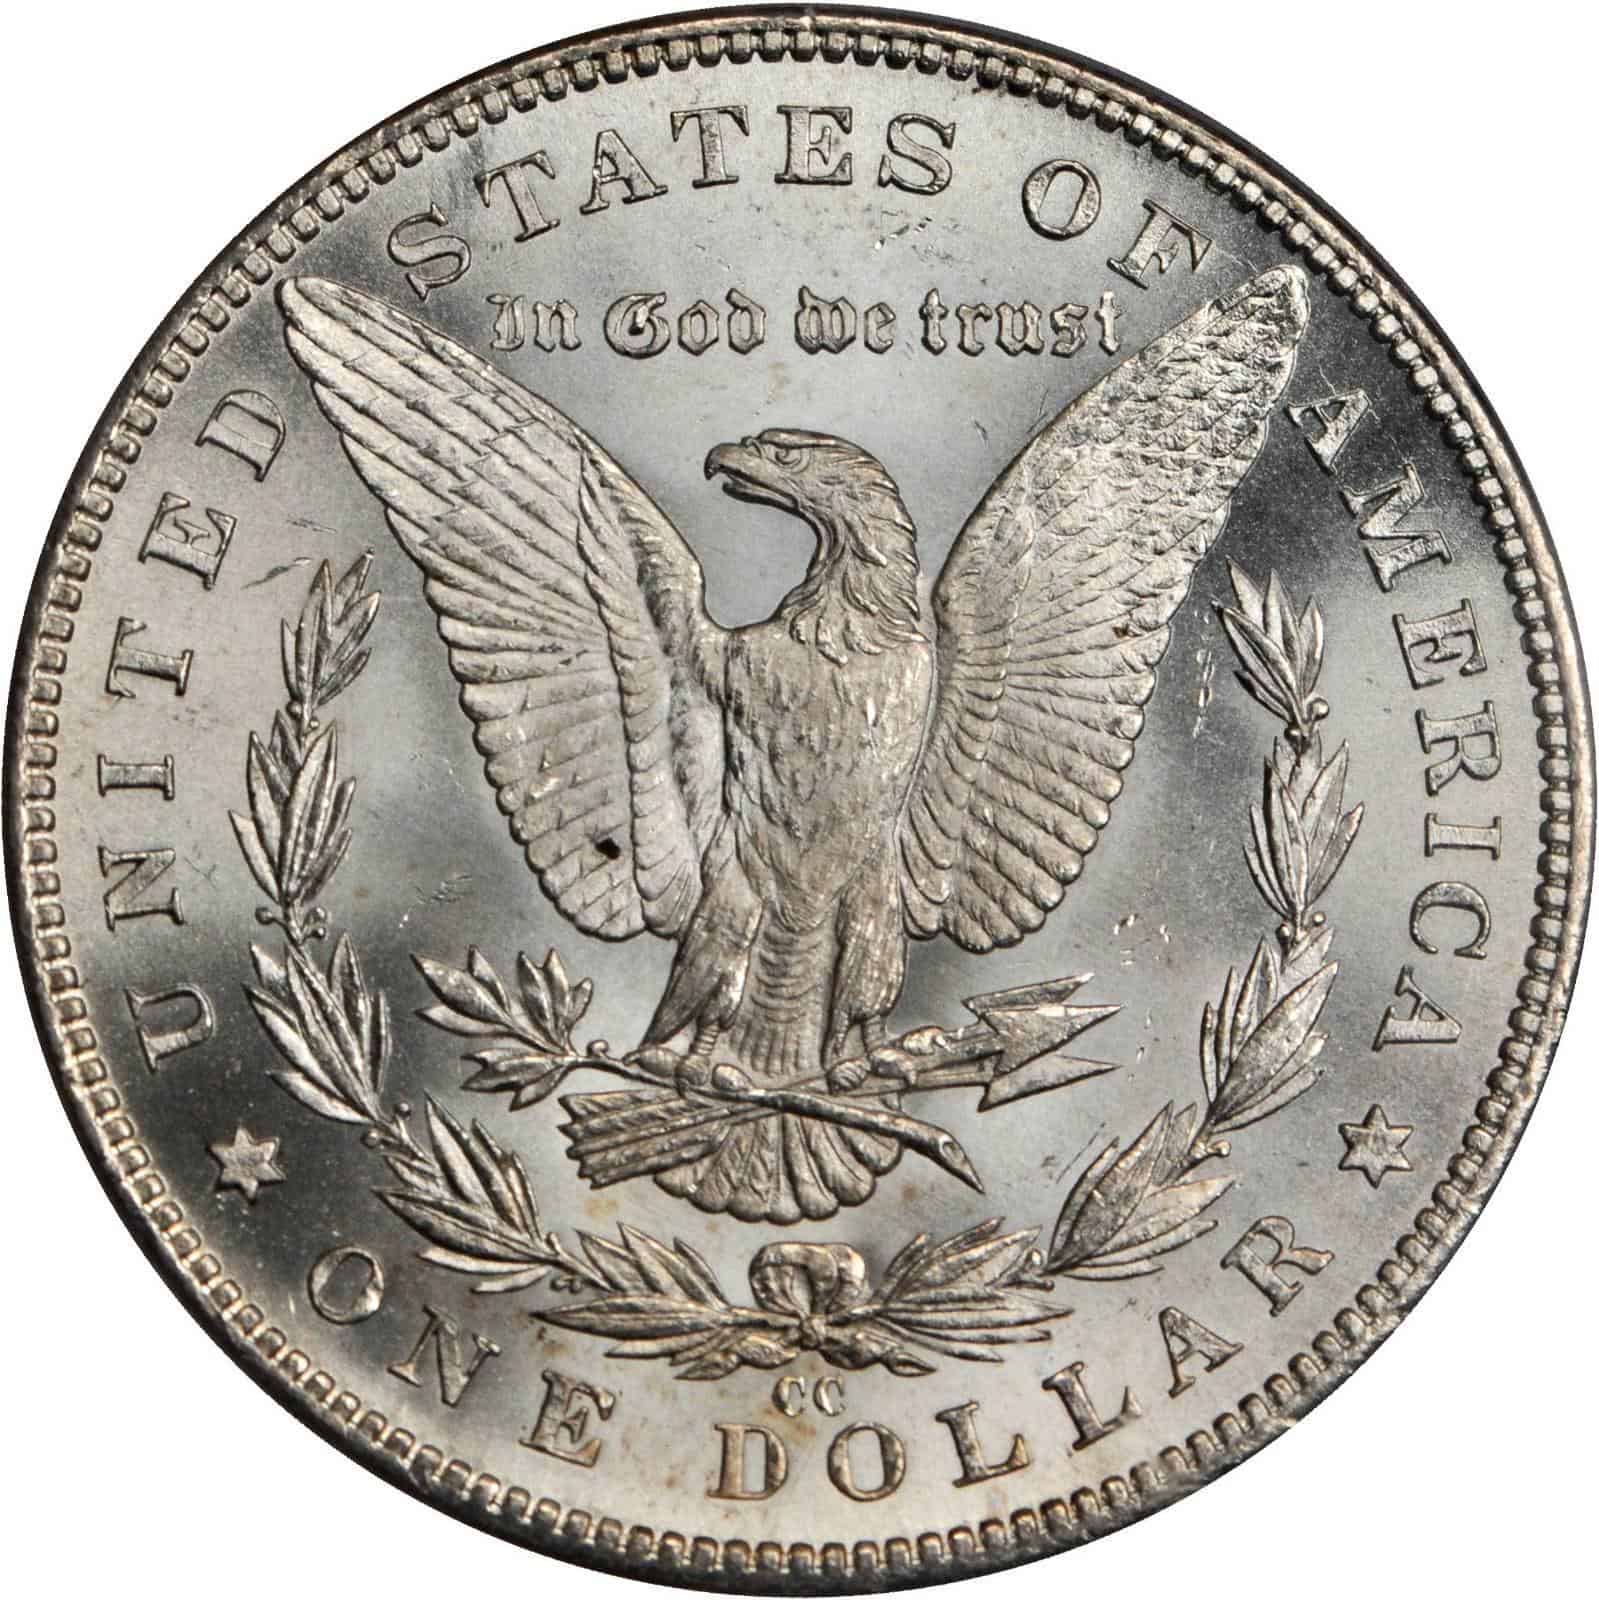 The reverse of the 1882 Morgan silver dollar